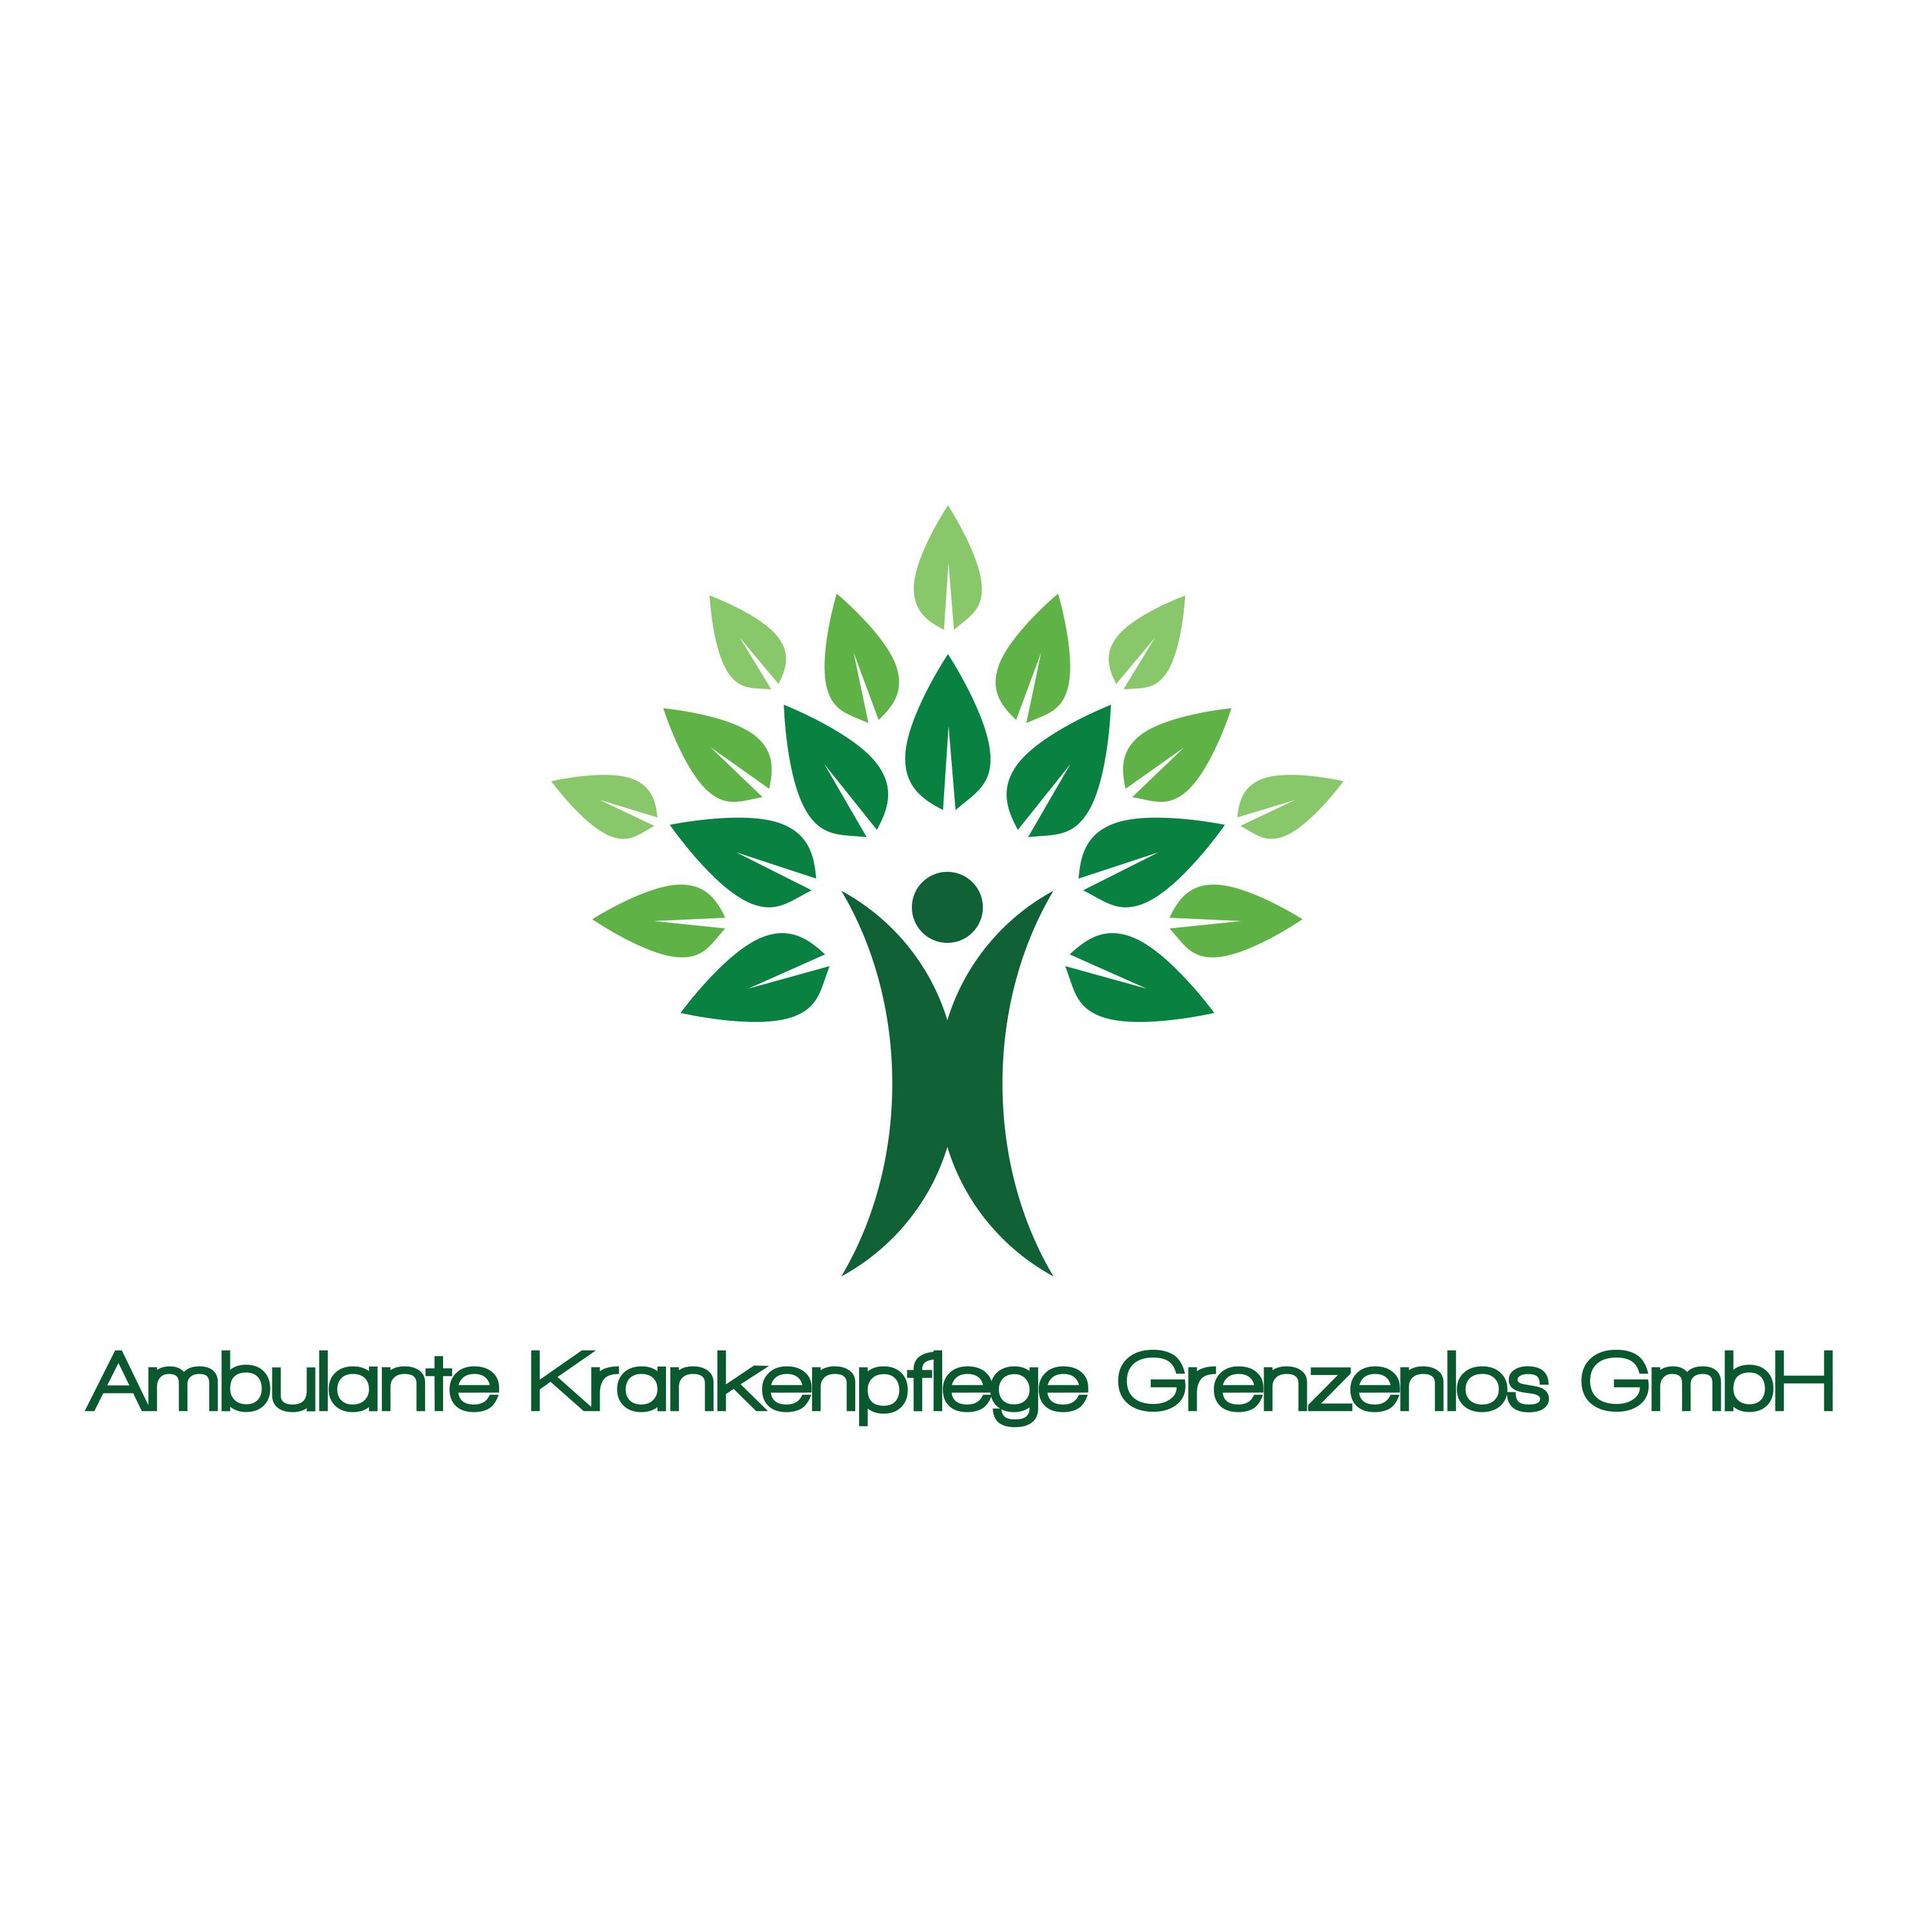 Ambulante Krankenpflege Grenzenlos GmbH Logo